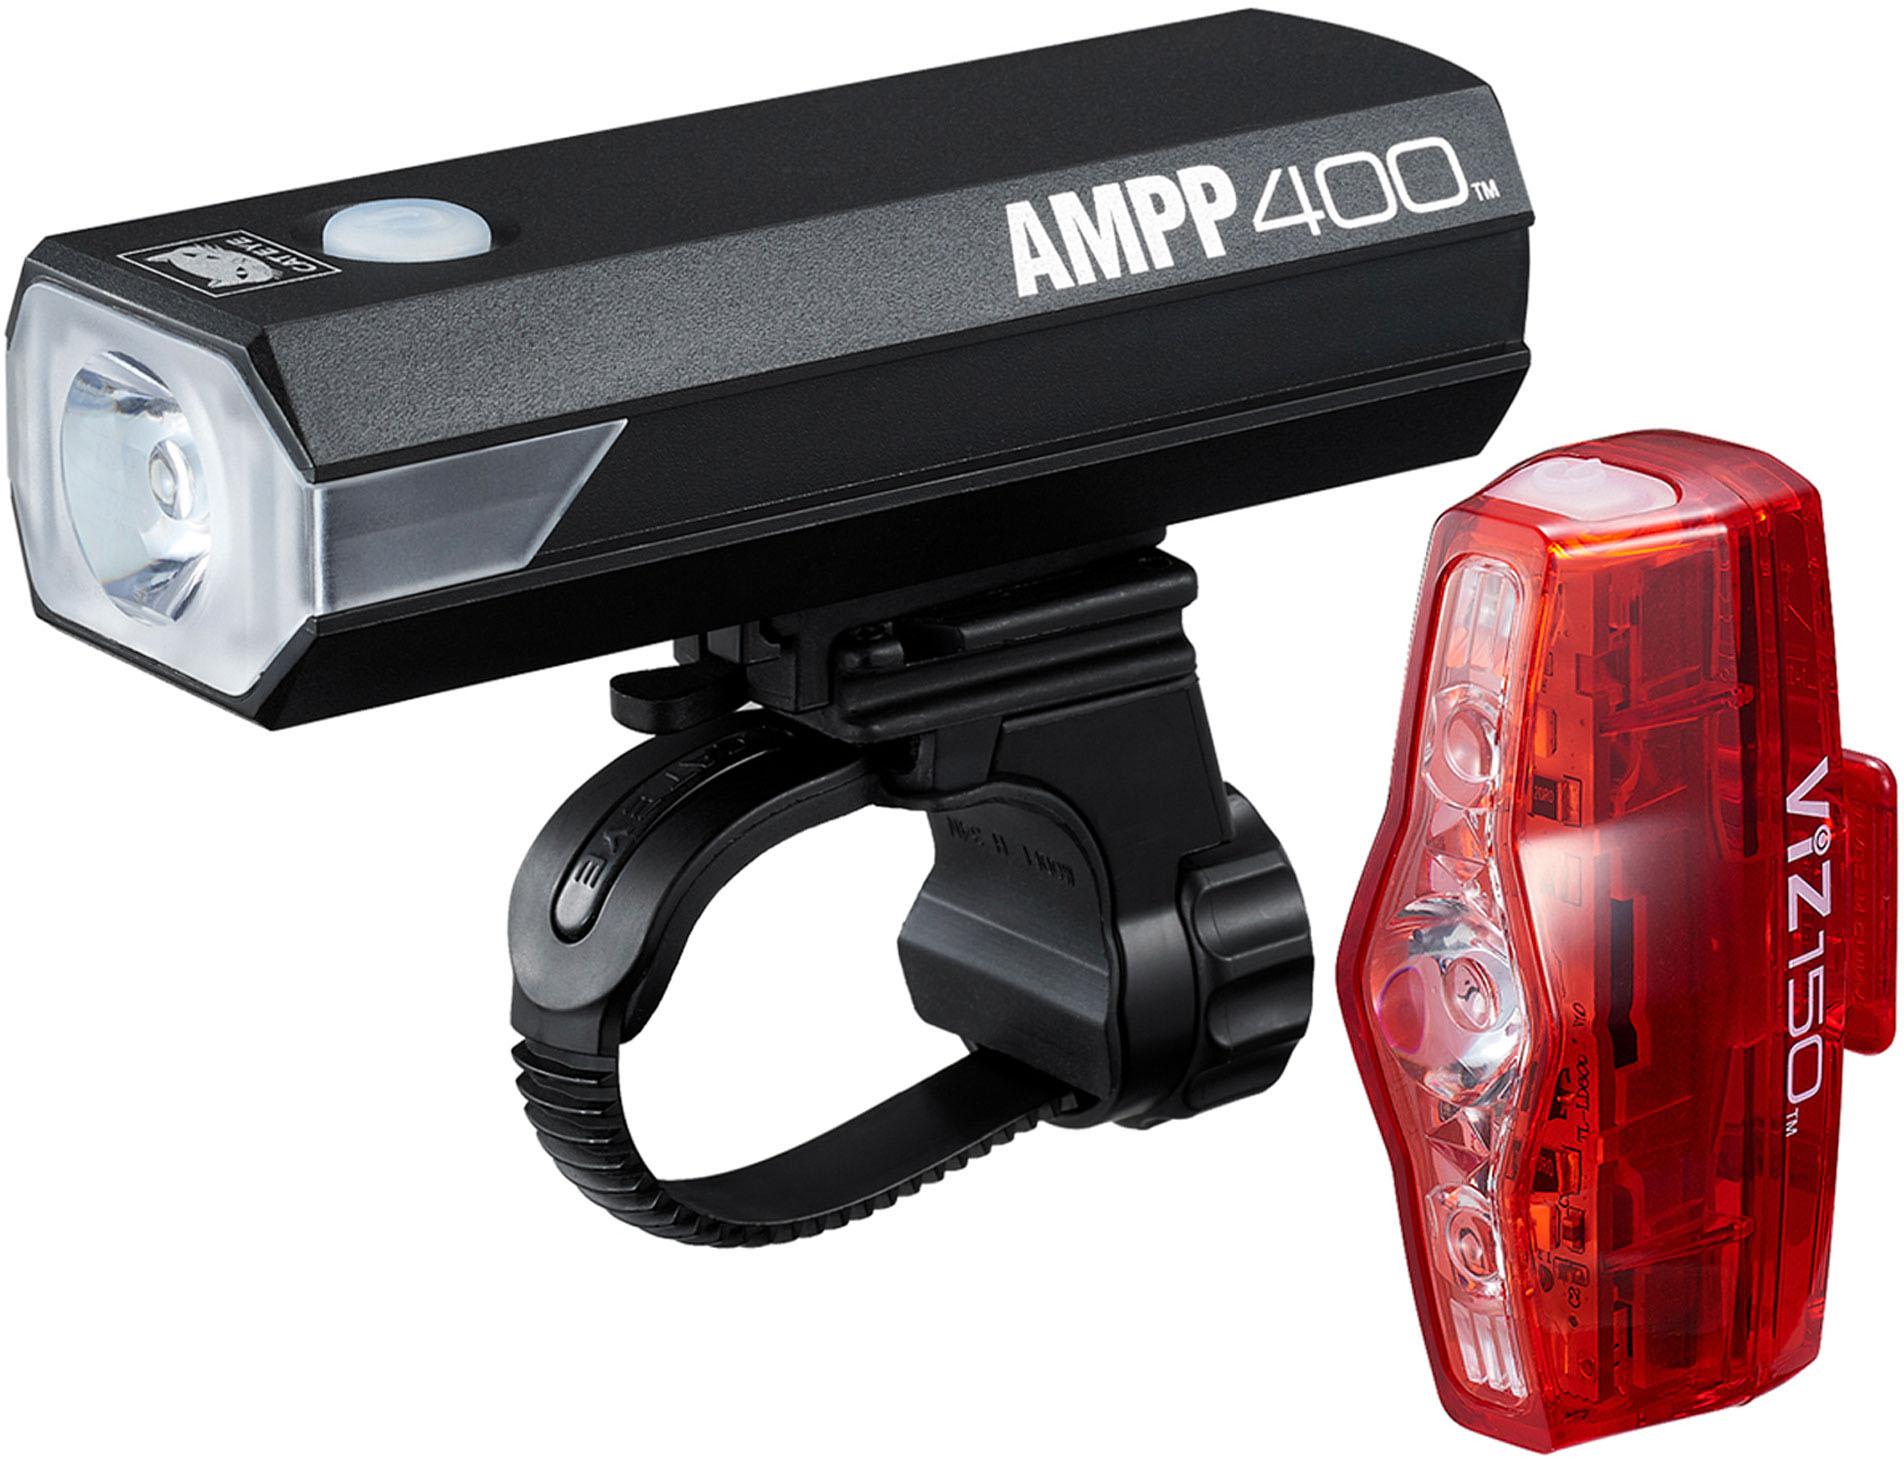 Cateye Ampp 400 And Viz 150 Light Set  Black/red